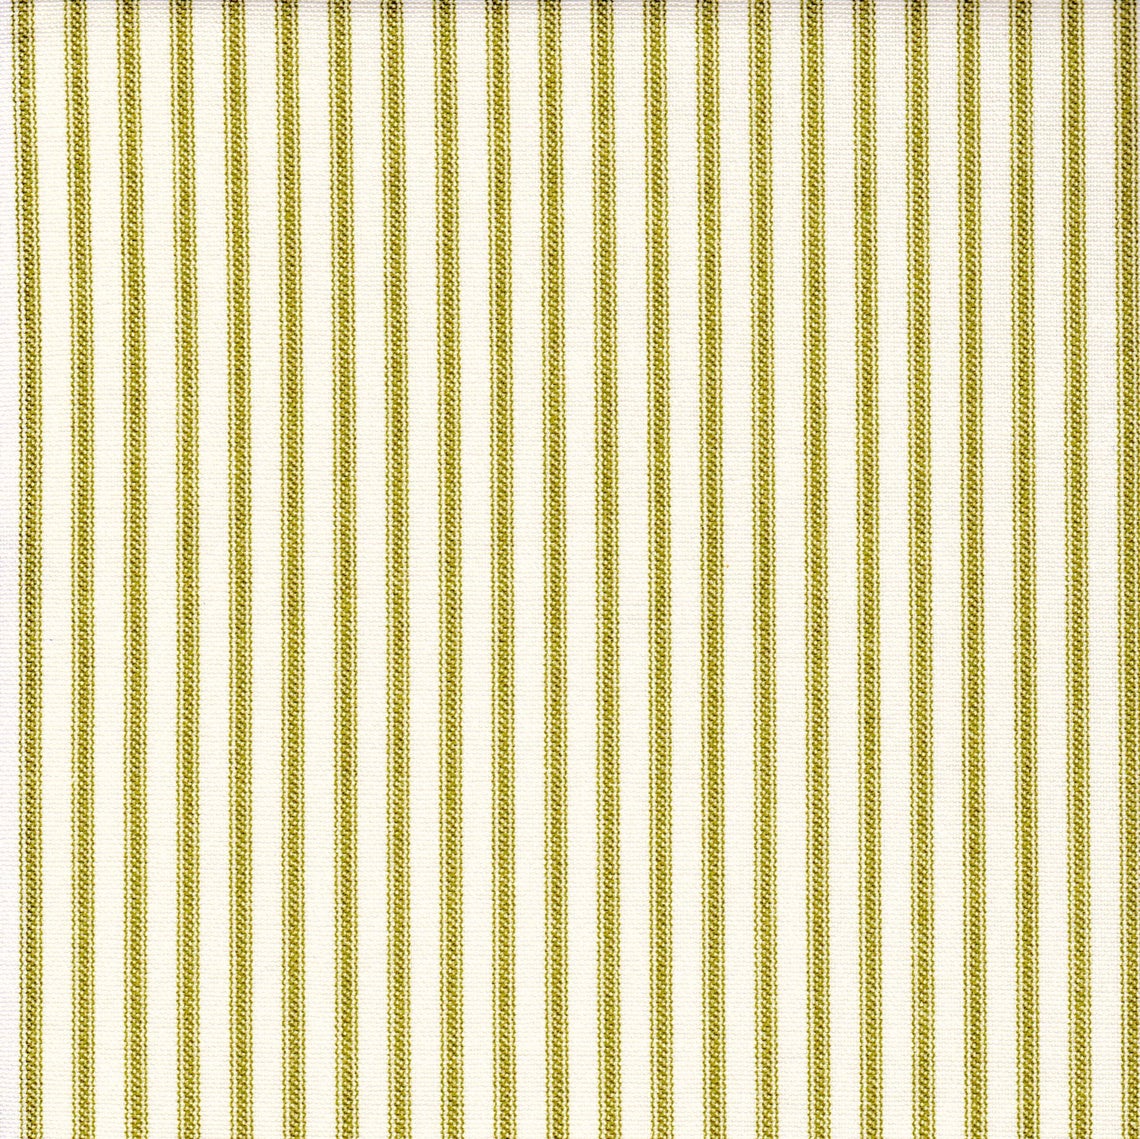 pinch pleated curtain panels pair in farmhouse meadow green ticking stripe on cream